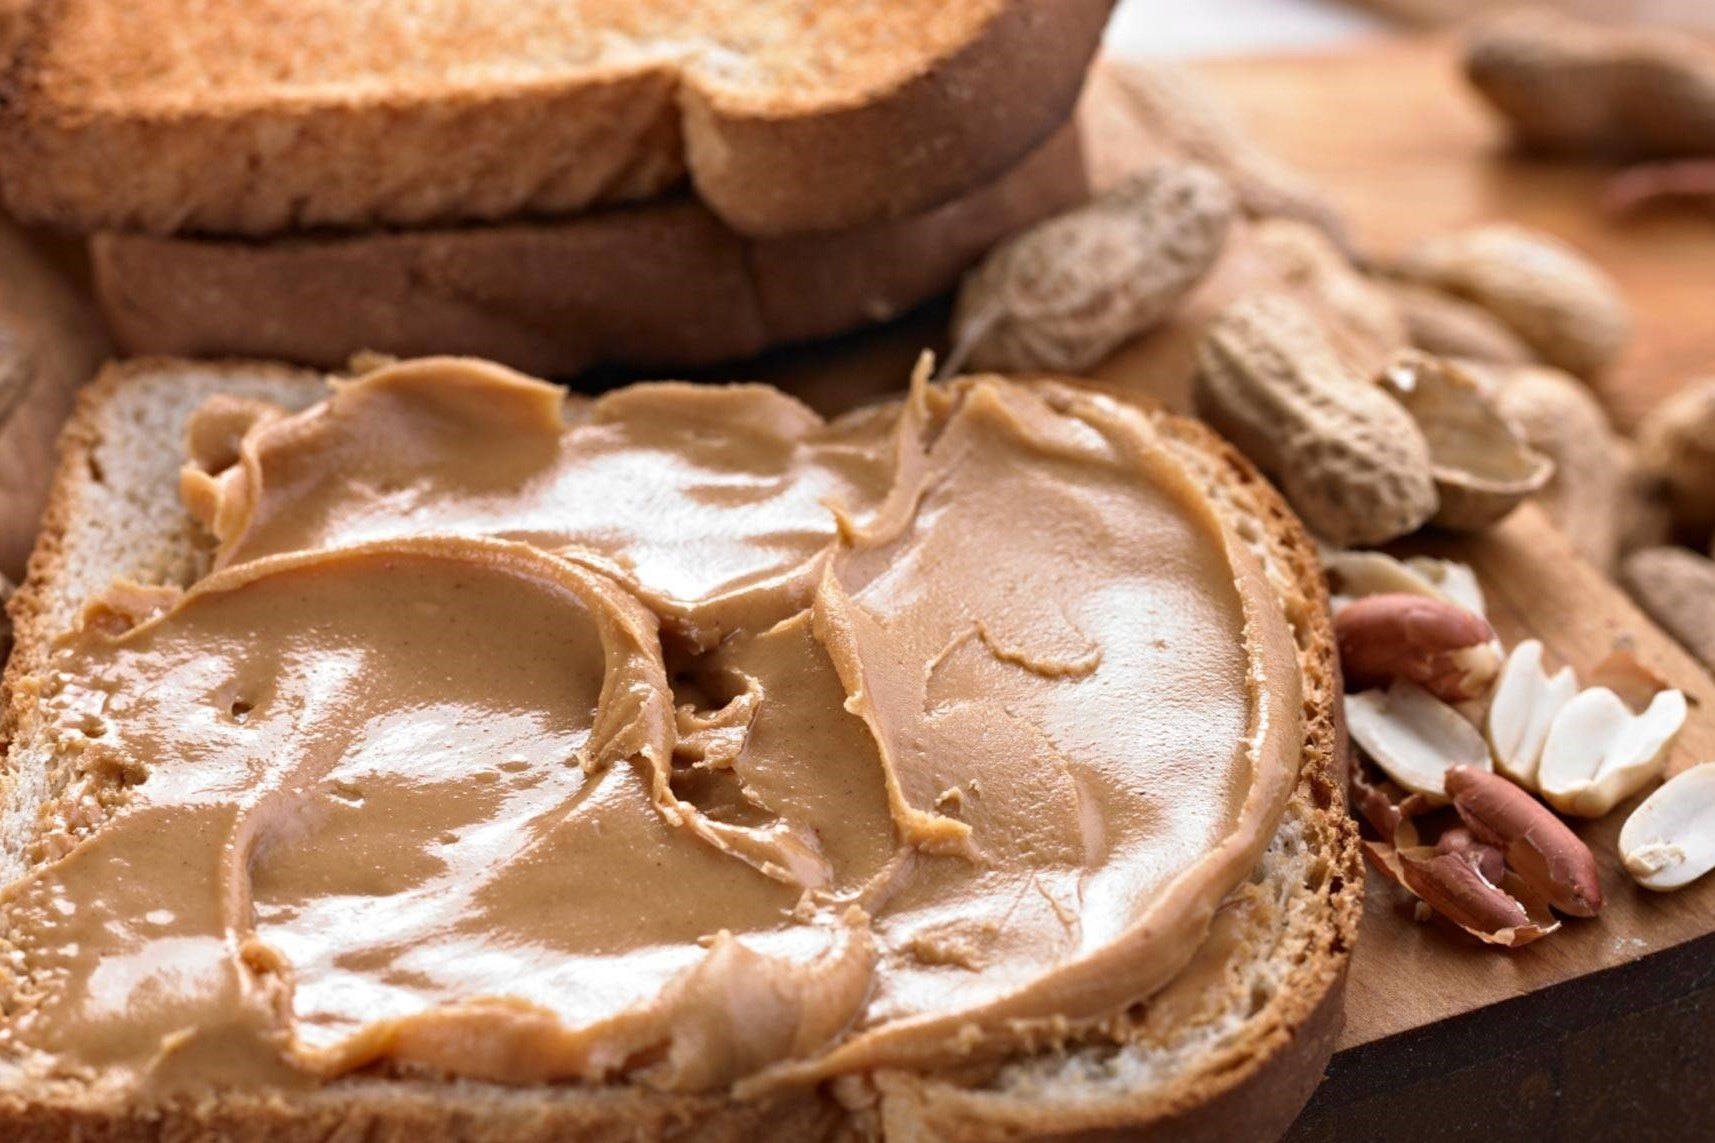 11-peanut-butter-sandwich-nutrition-facts